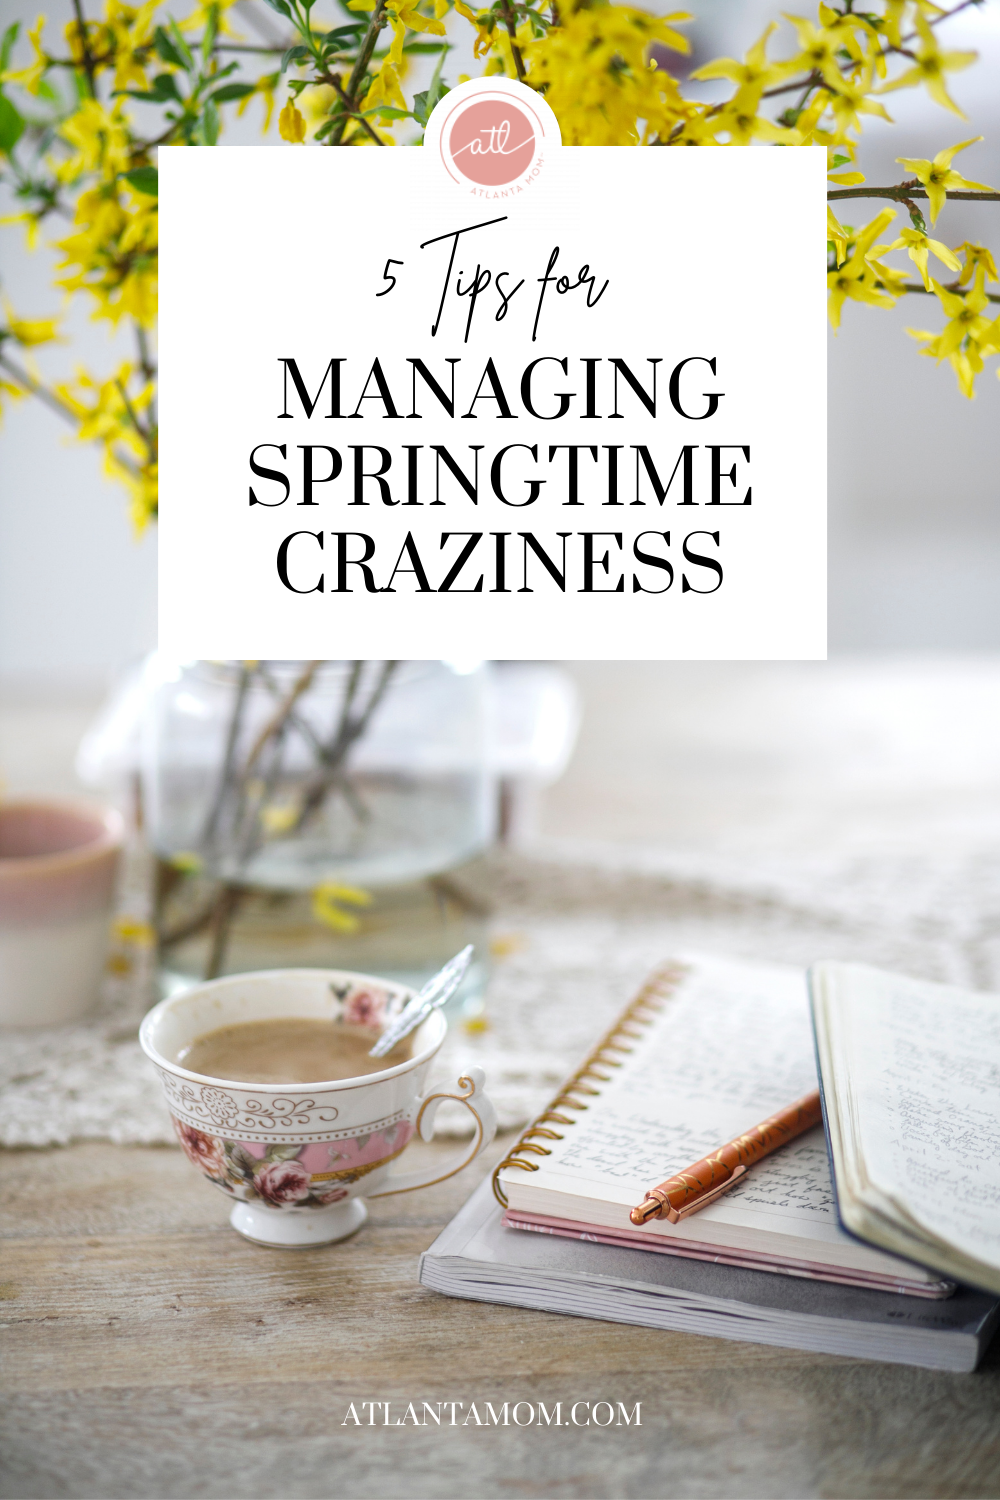 5 Tips for Managing Springtime Craziness